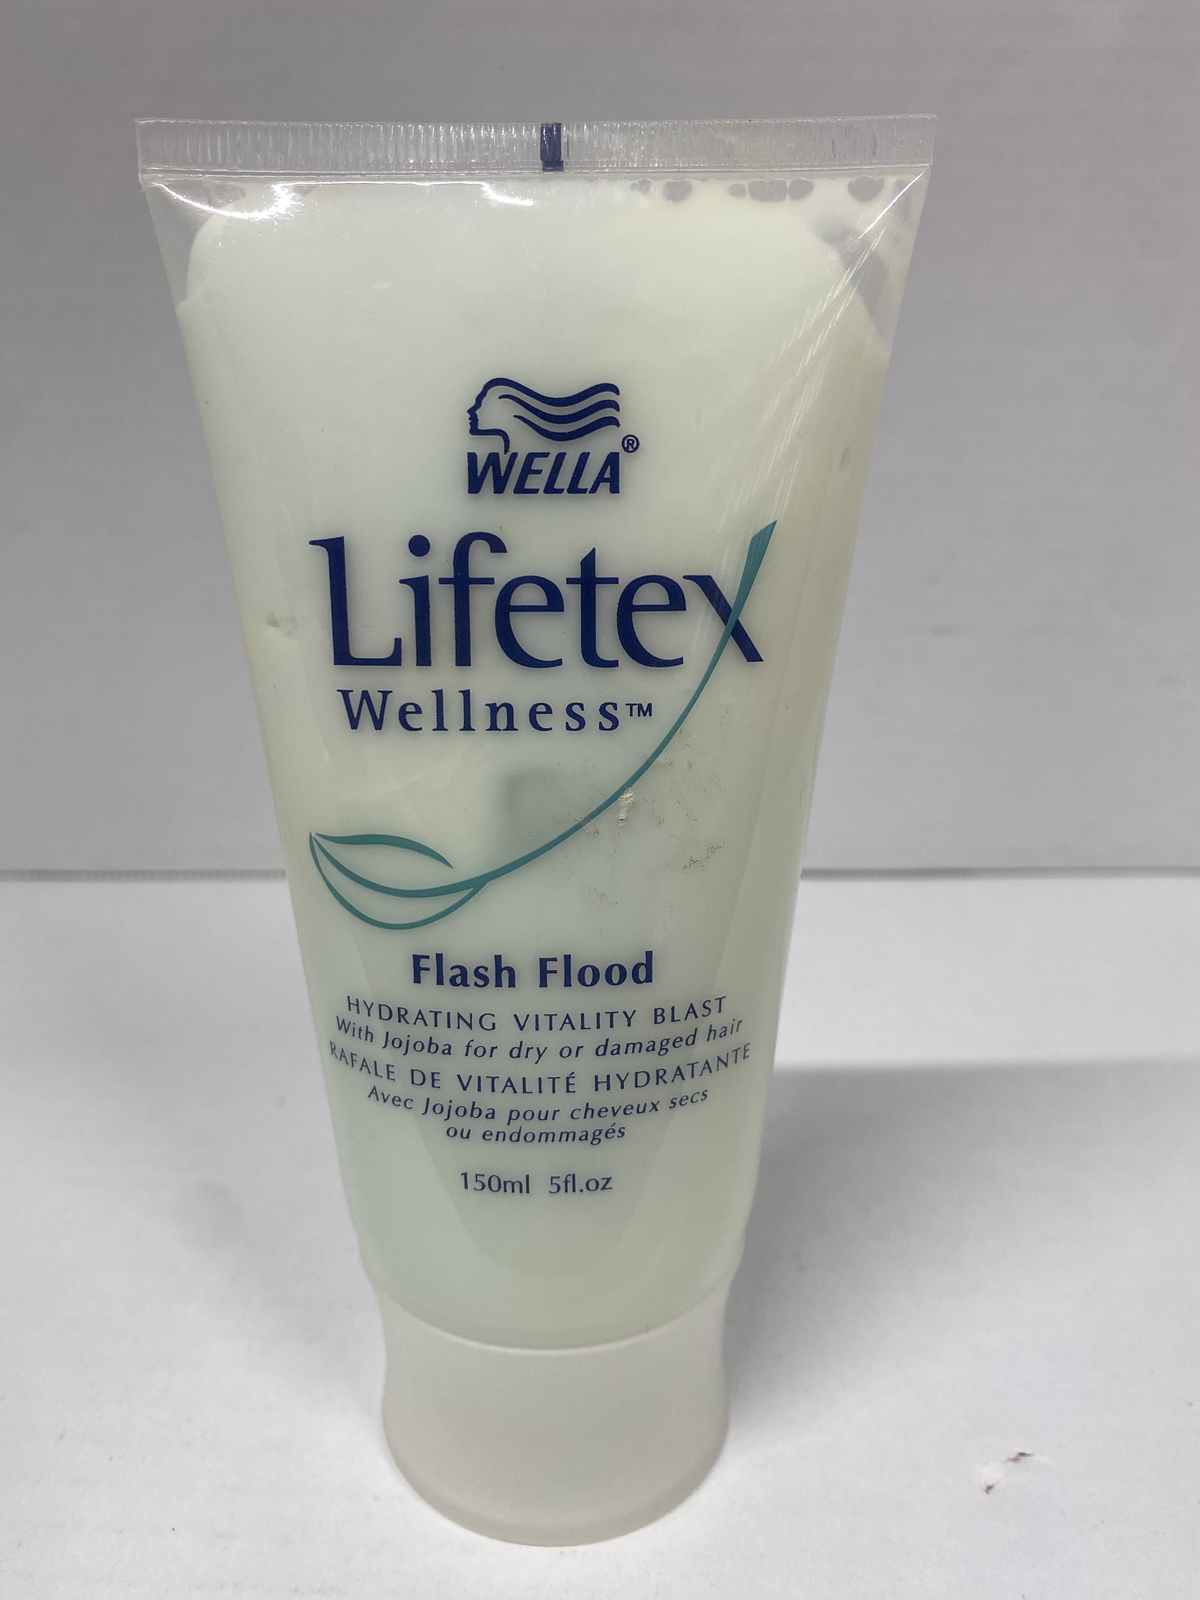 Primary image for Wella Lifetex Wellness Flash Flood Vitality Blast for Dry or Damaged Hair 5oz